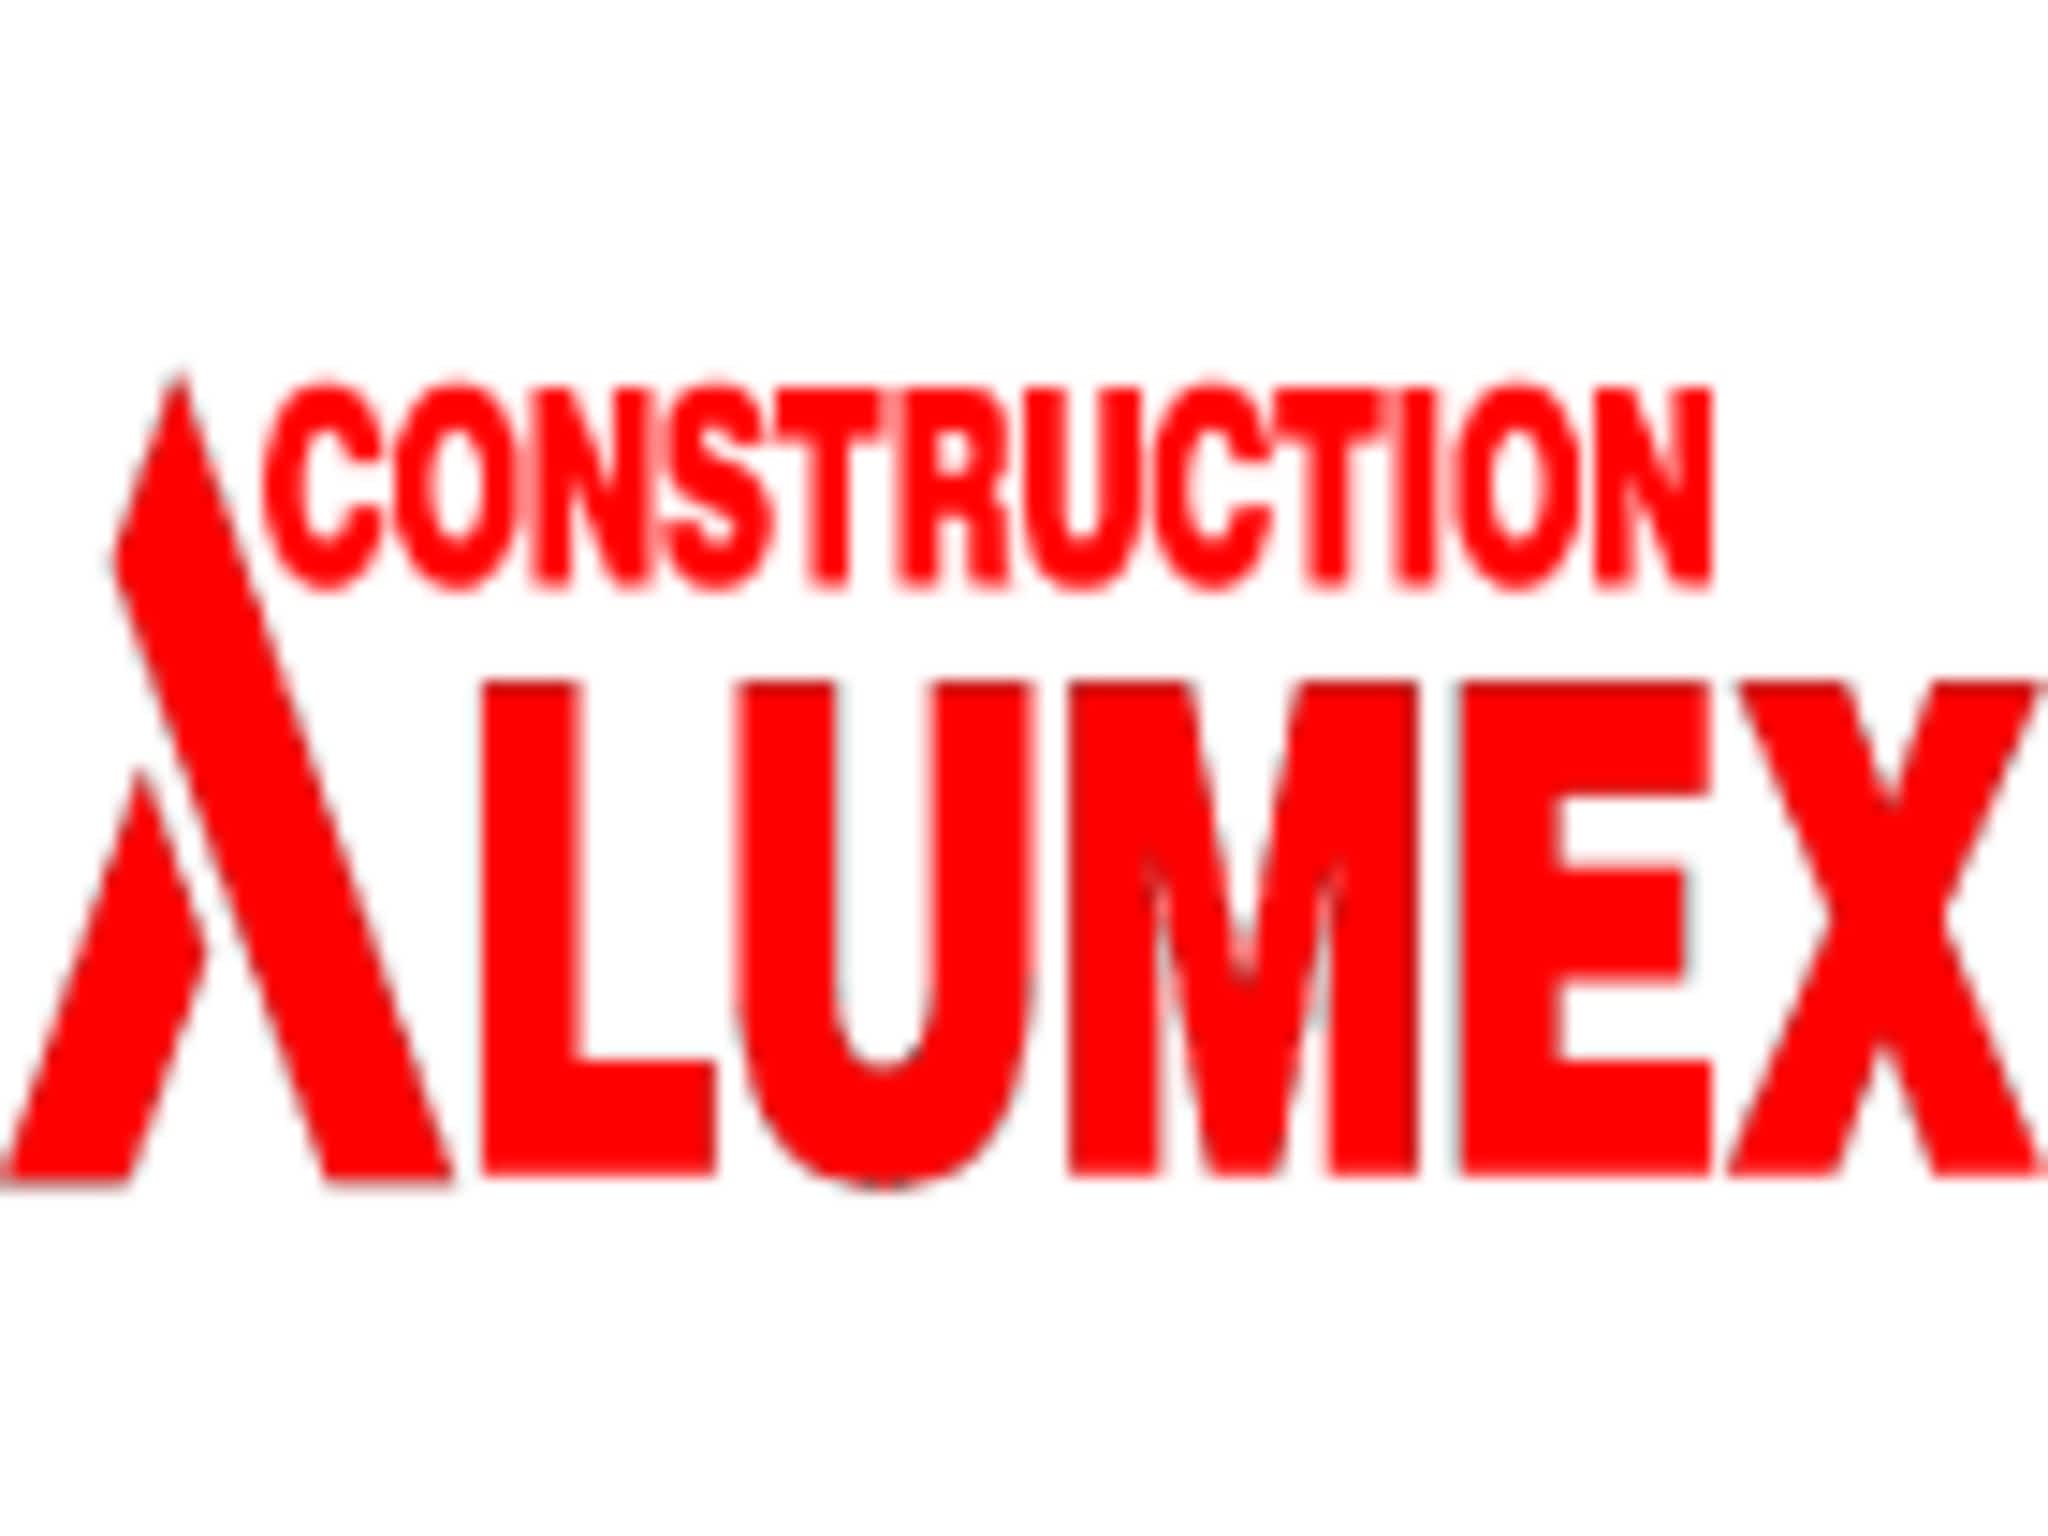 photo Construction Alumex